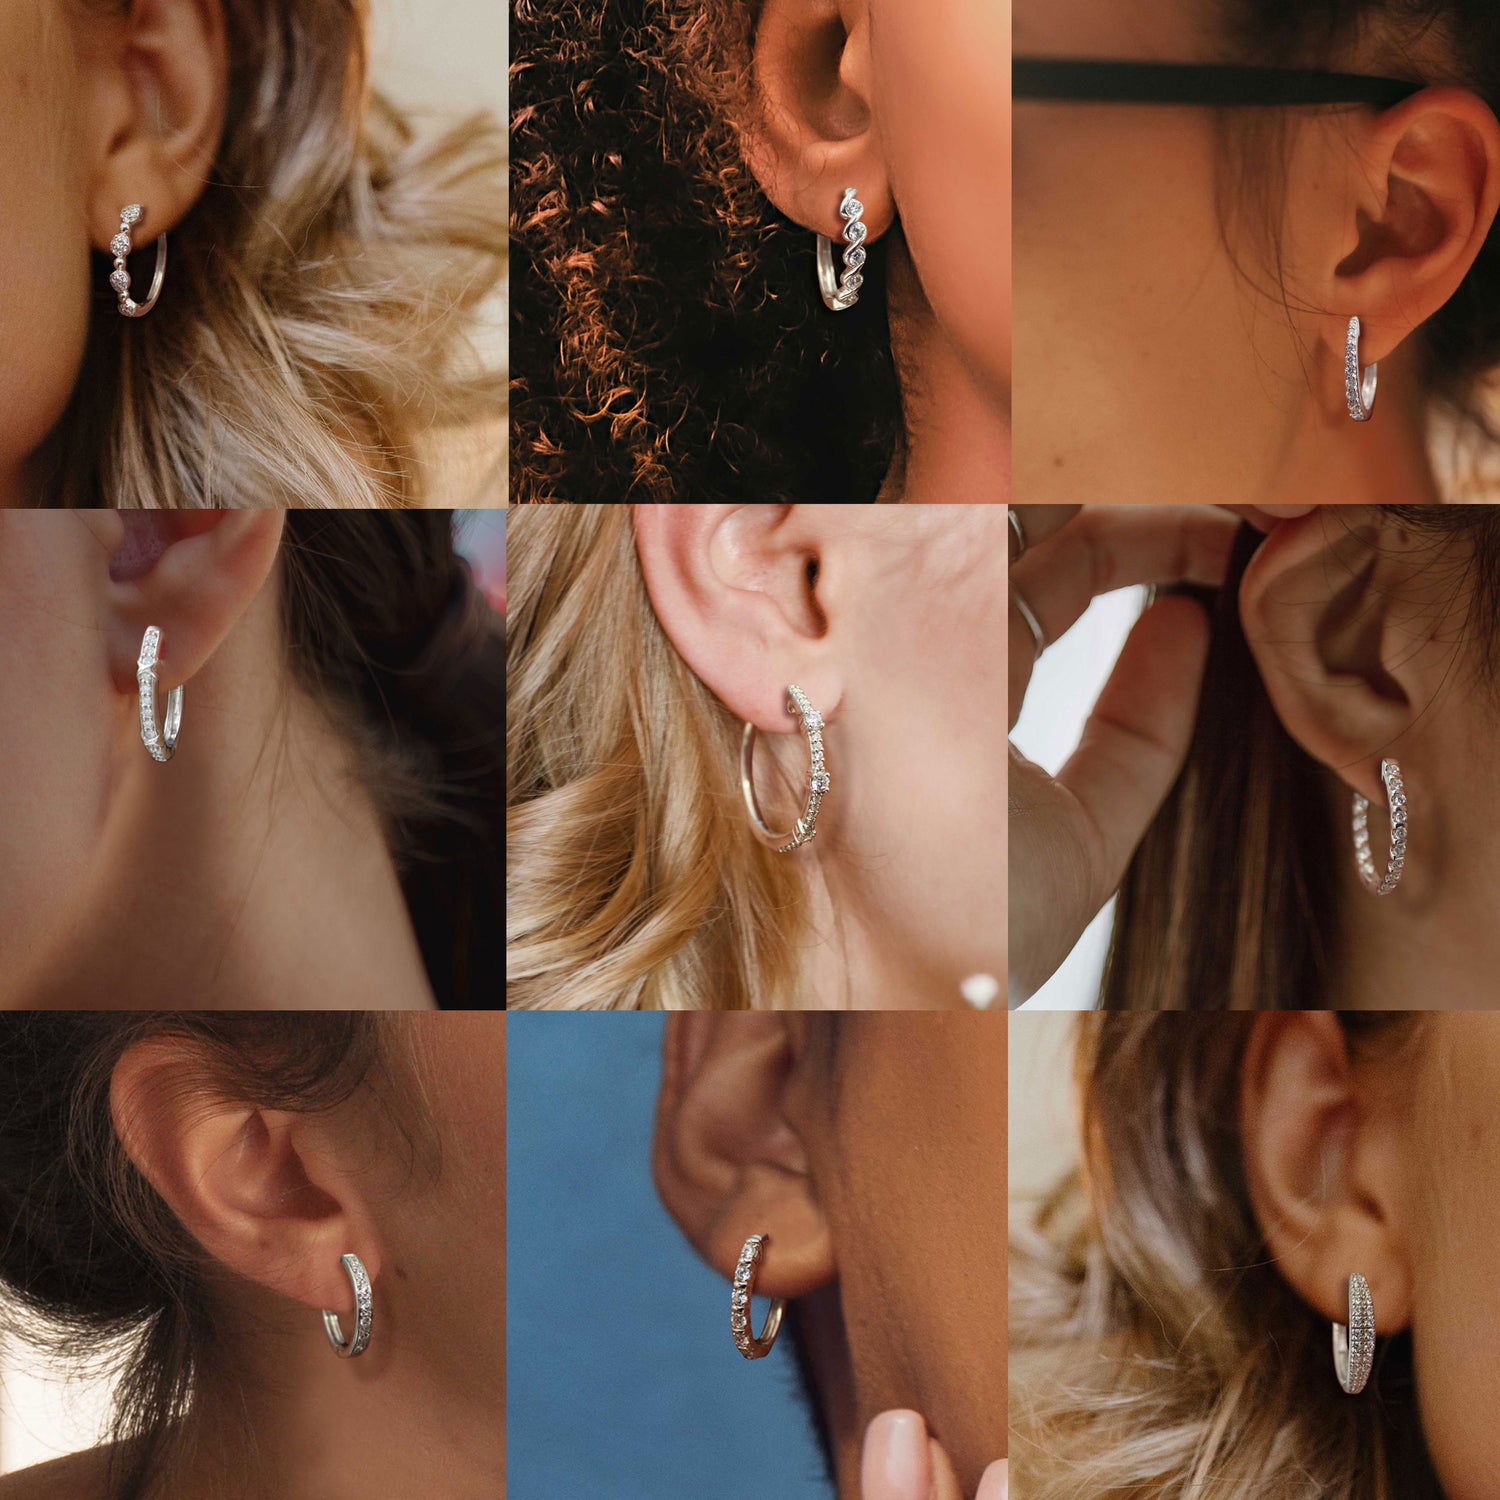 16 Design Diamond Hoops Earrings set in 925 Sterling Silver fine jewelry huggies trend gift wedding bridal brides